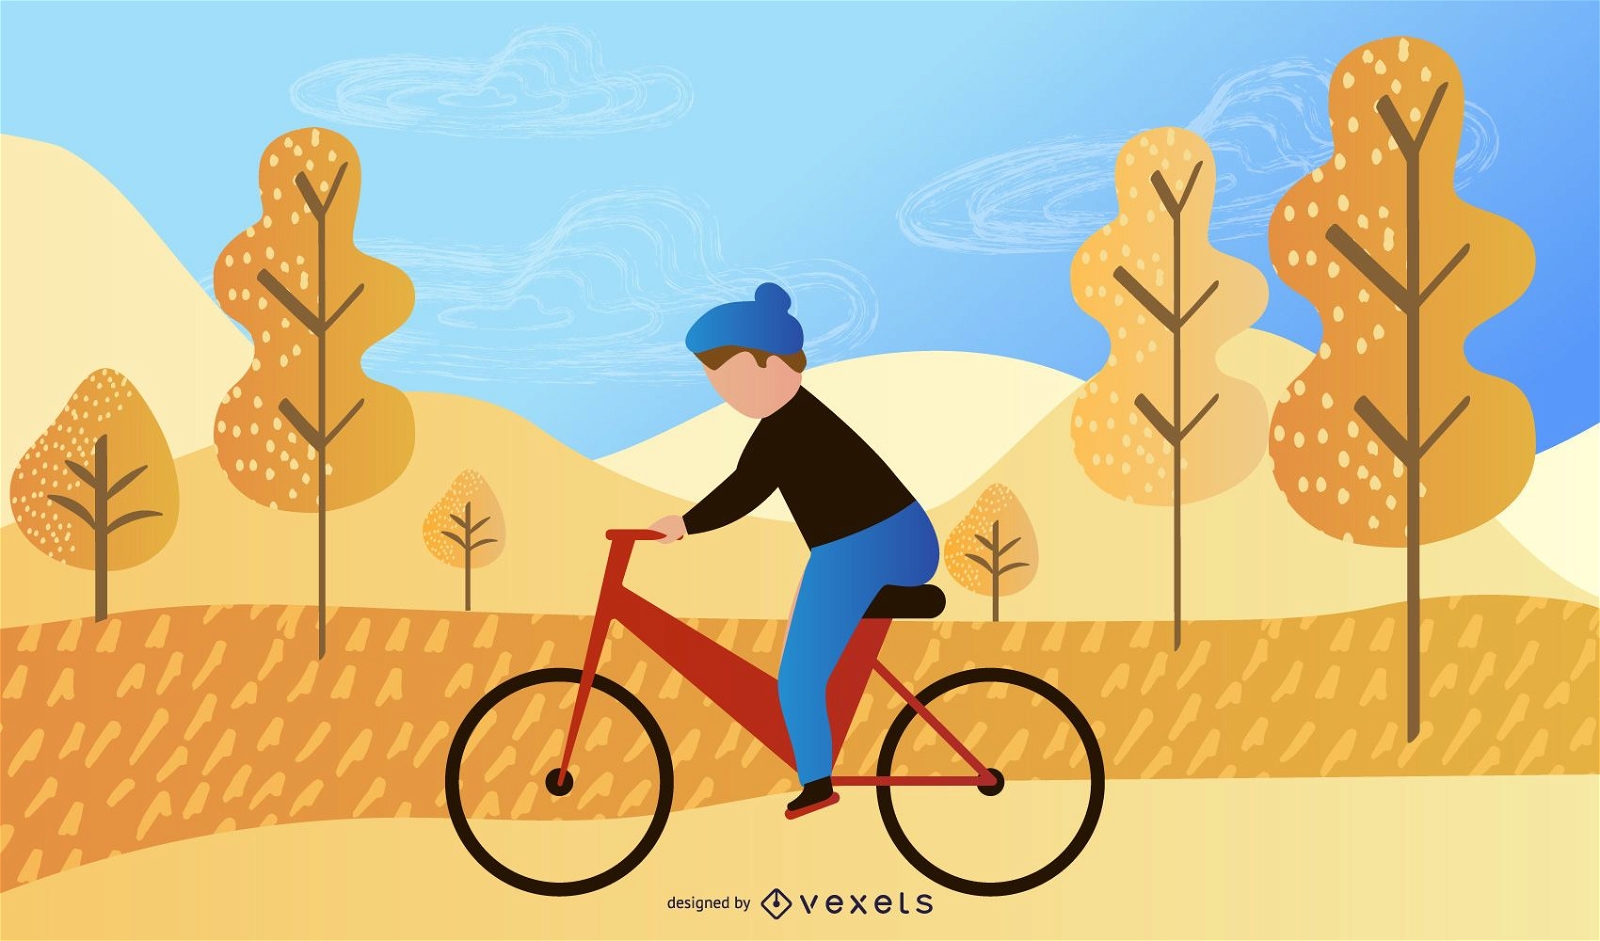 biker in the park illustration